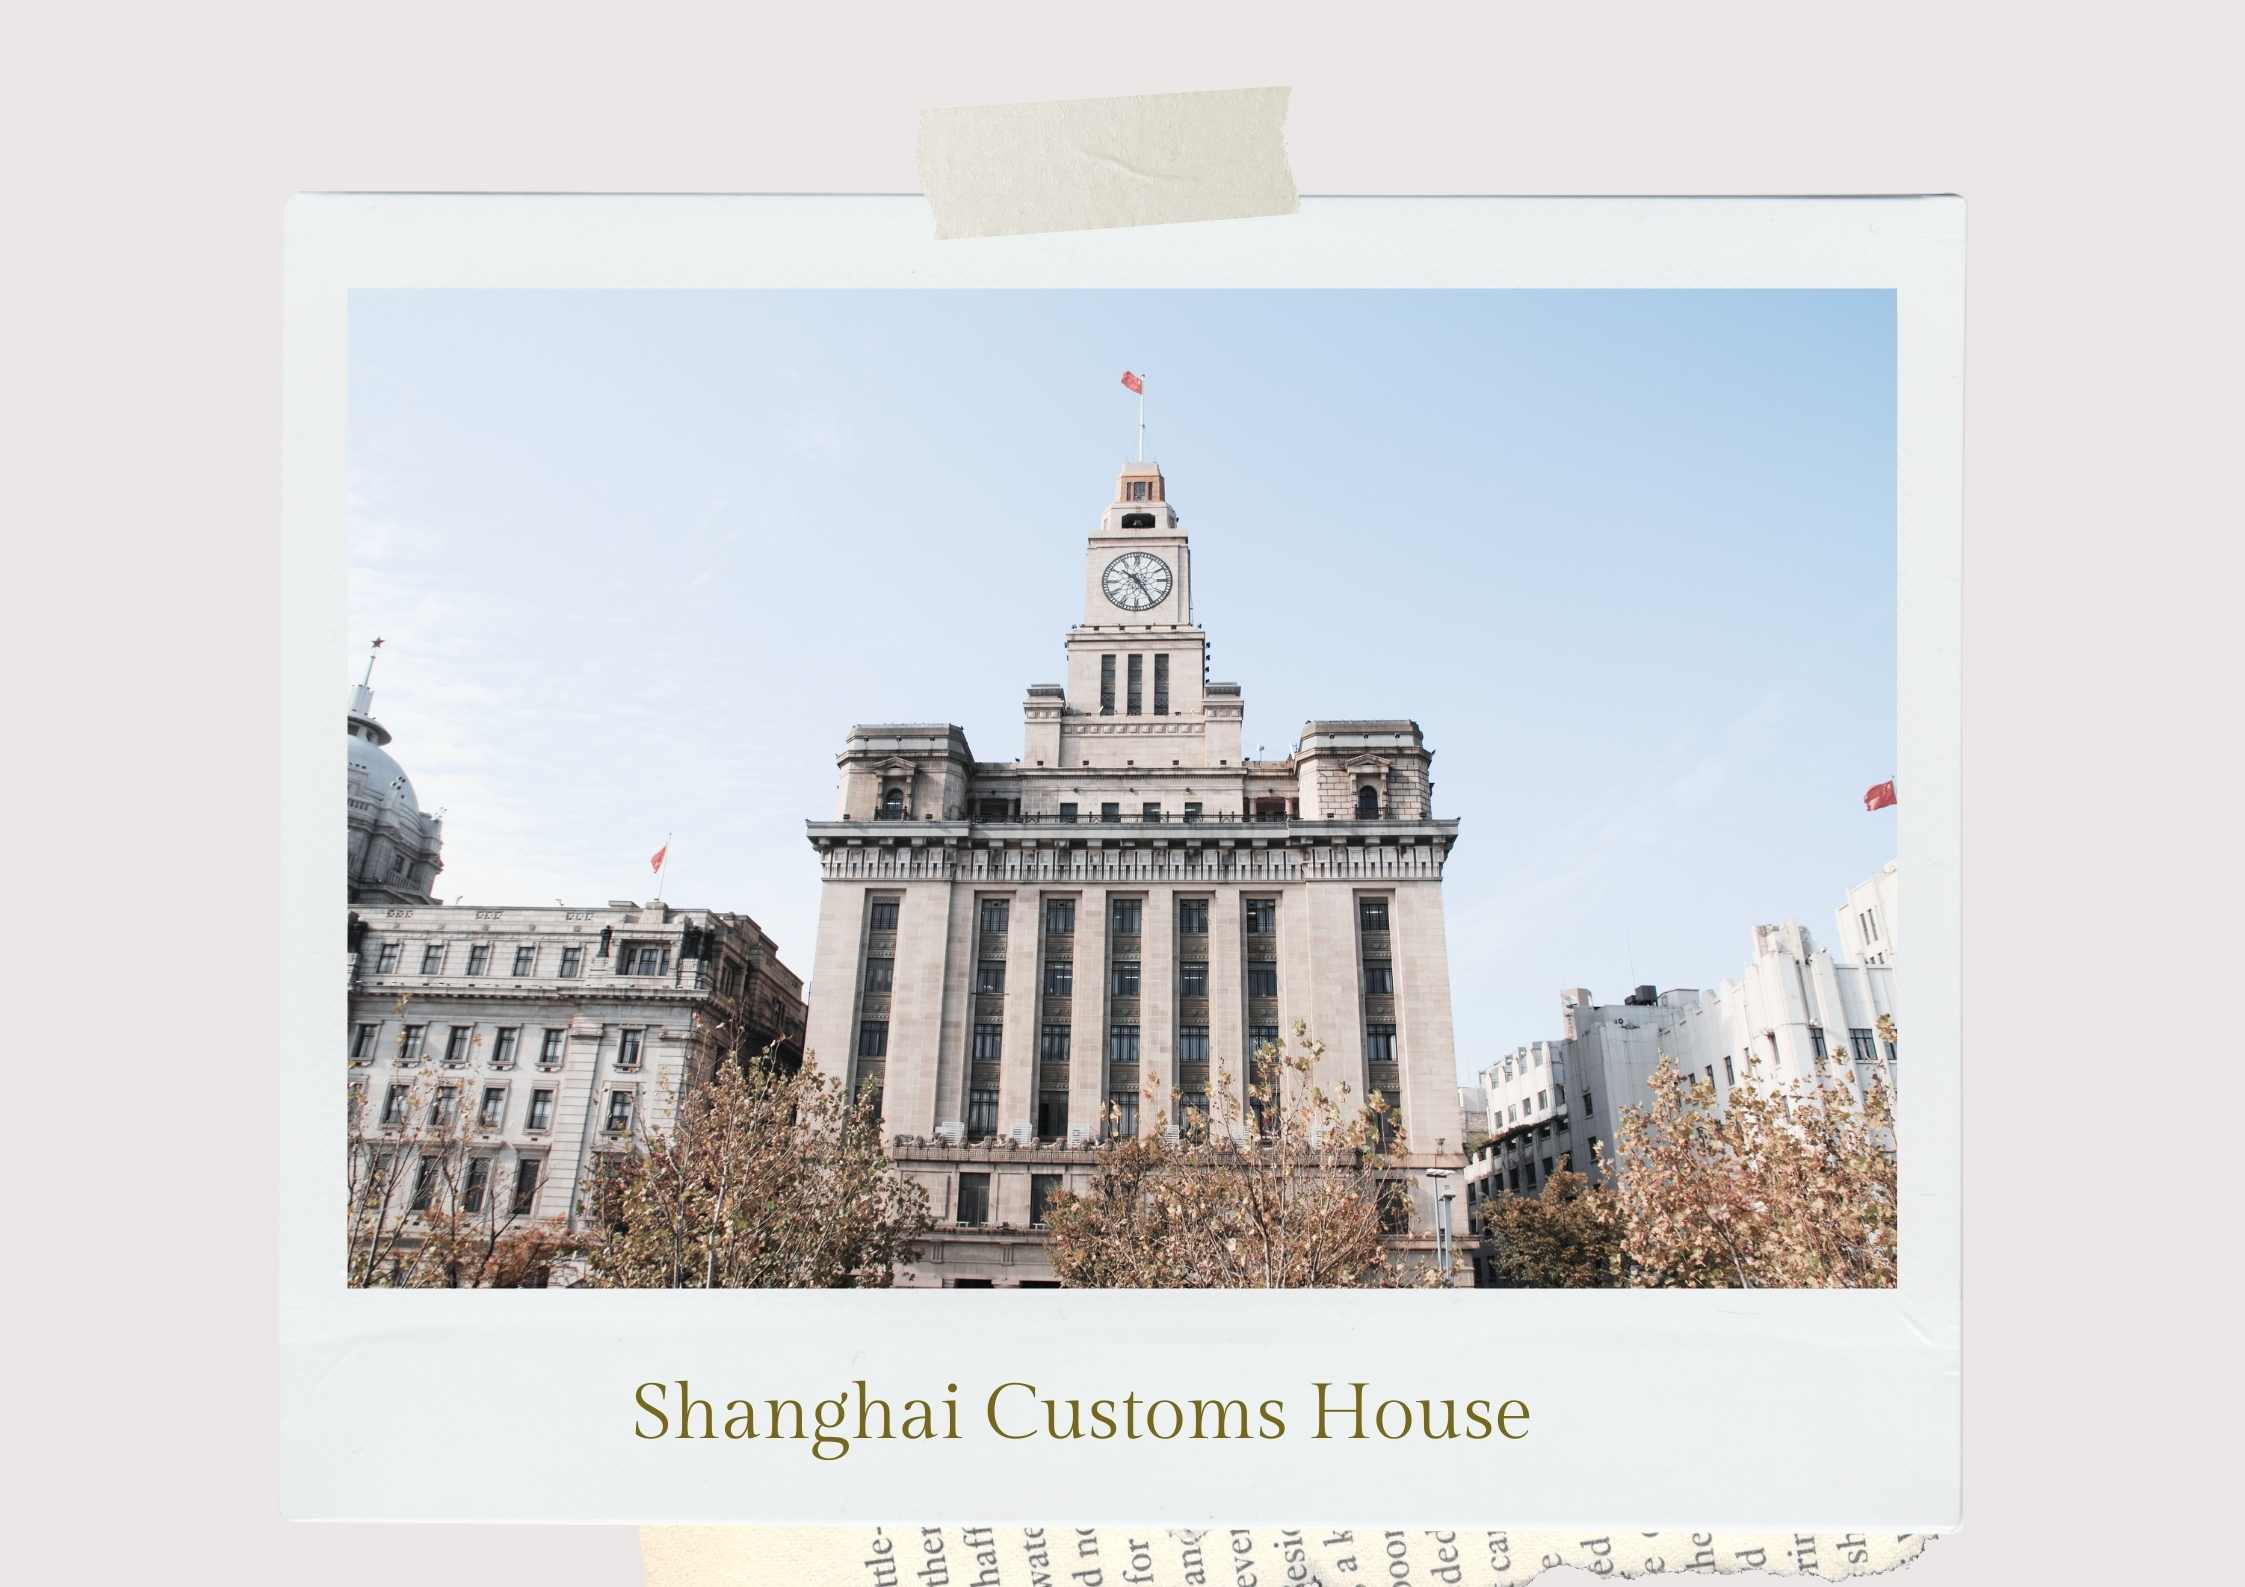 Shanghai Customs House